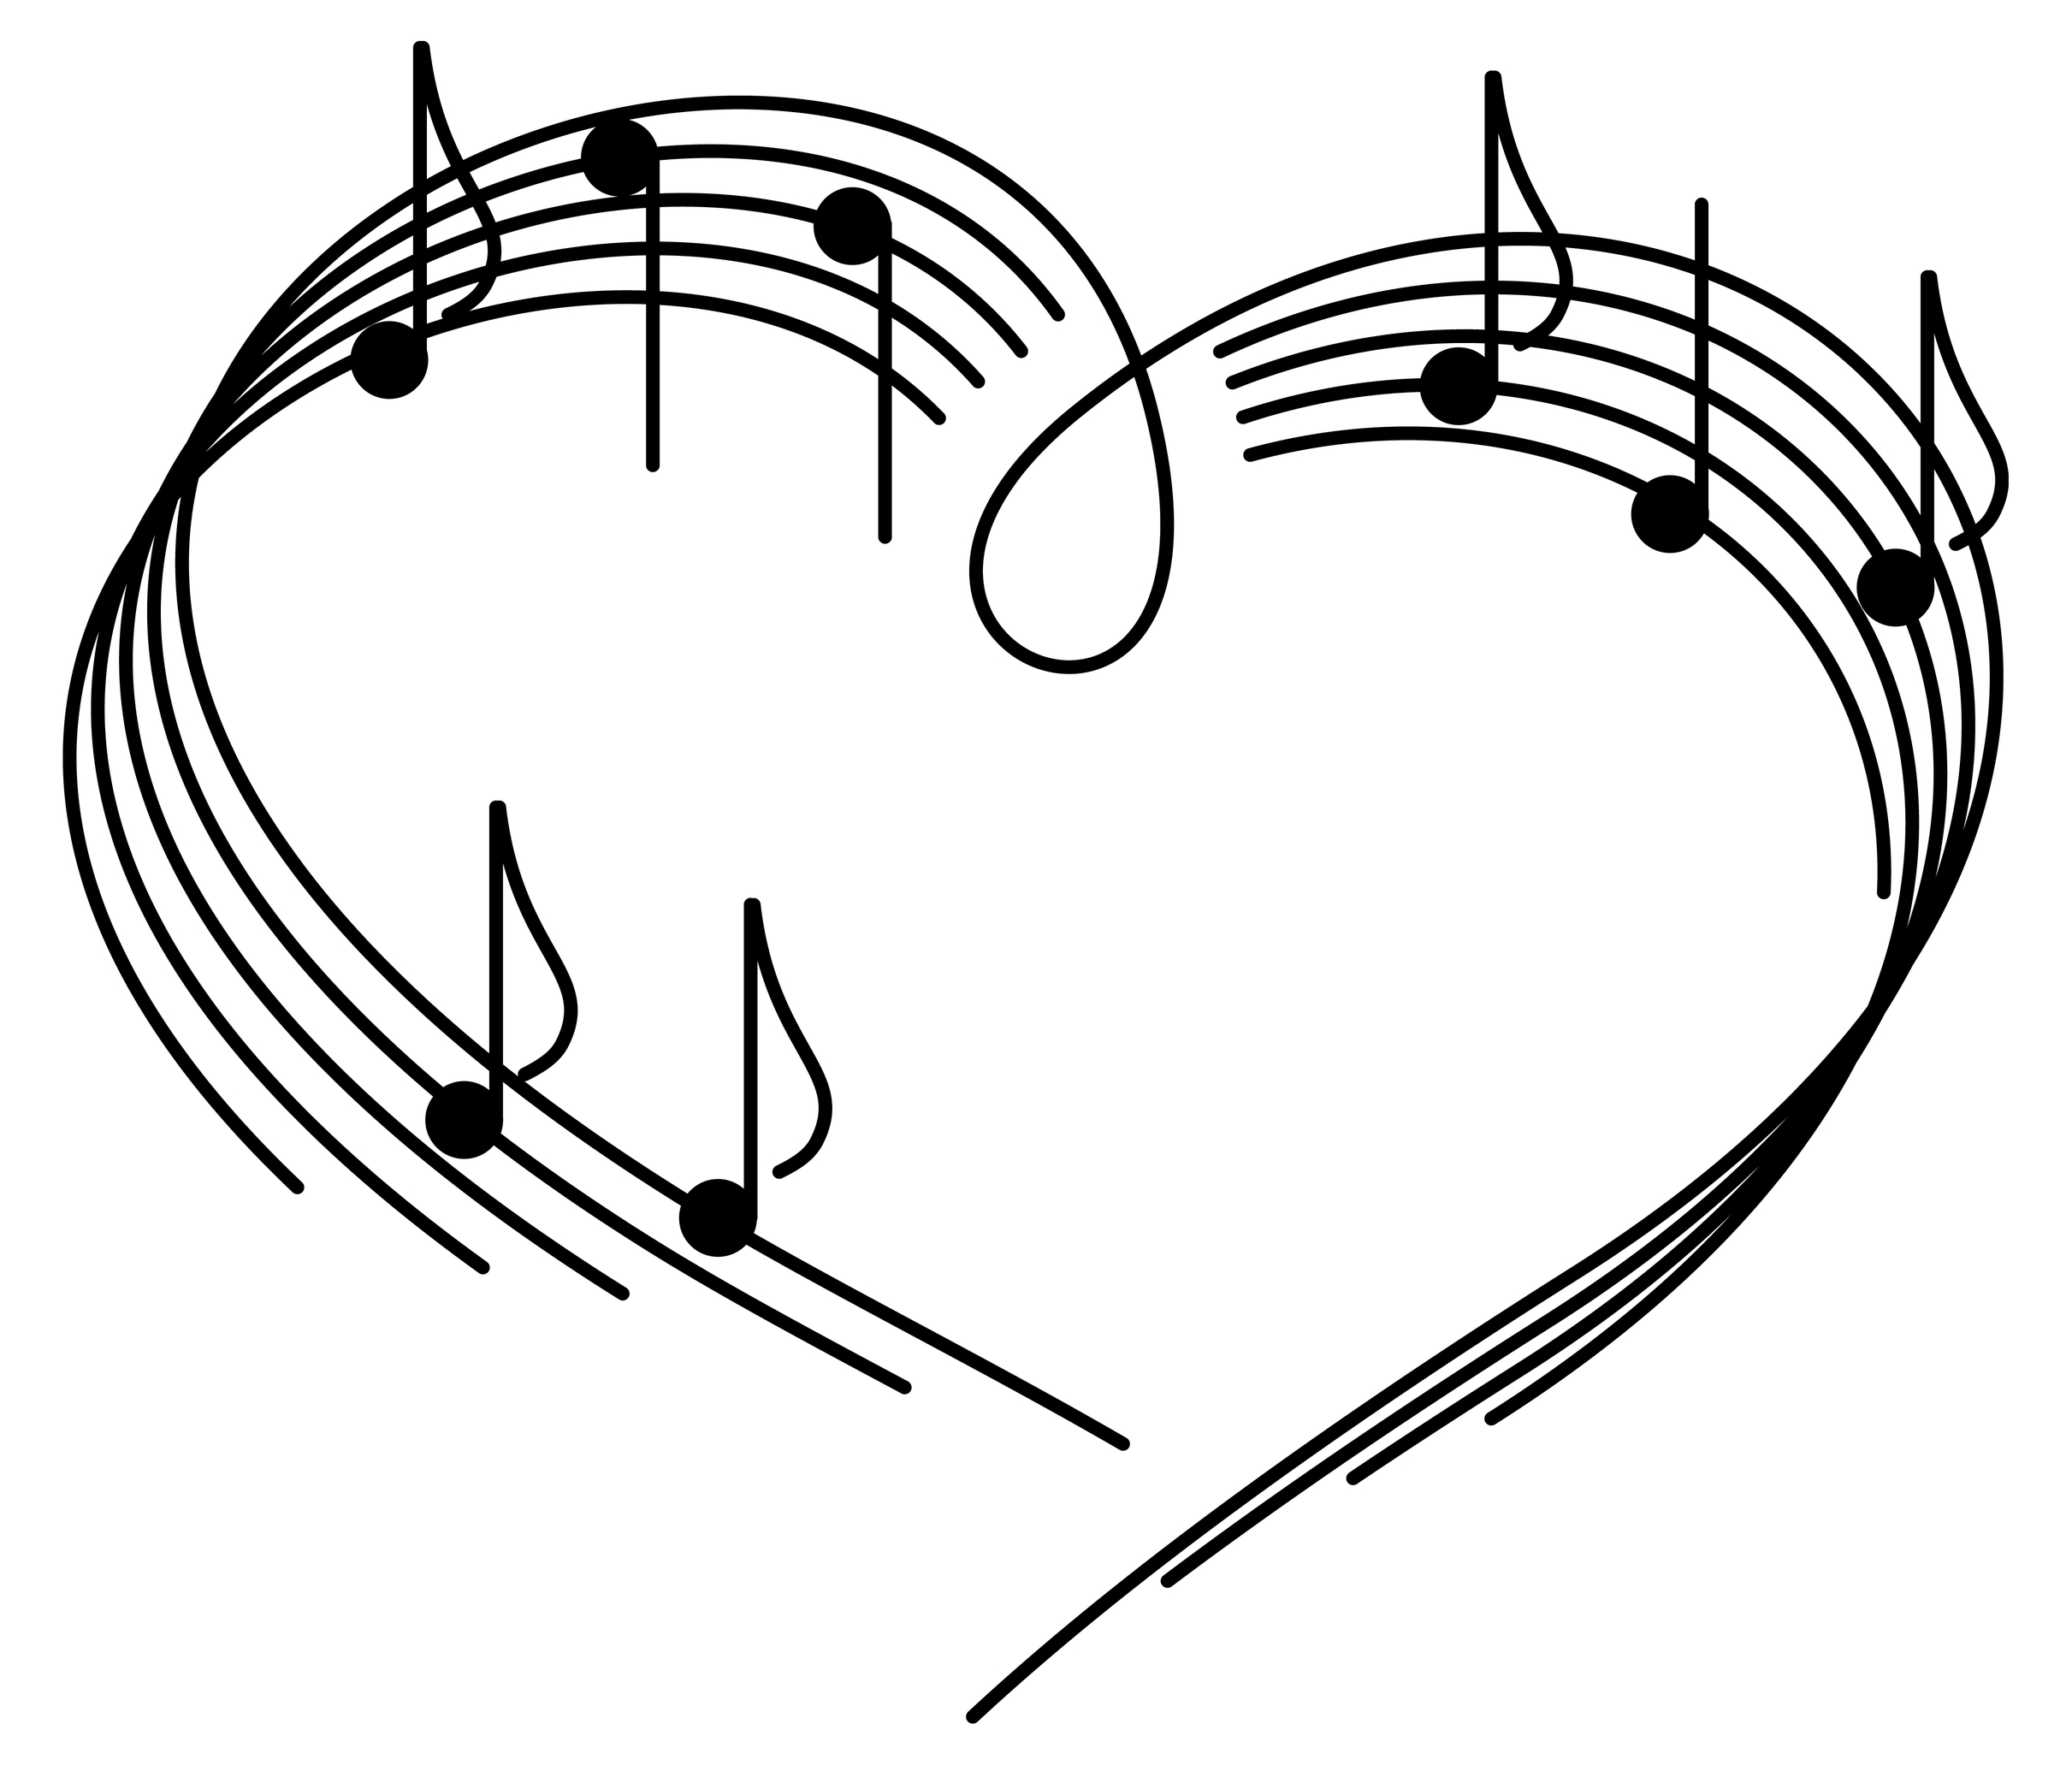 This Music Heart Wallpaper